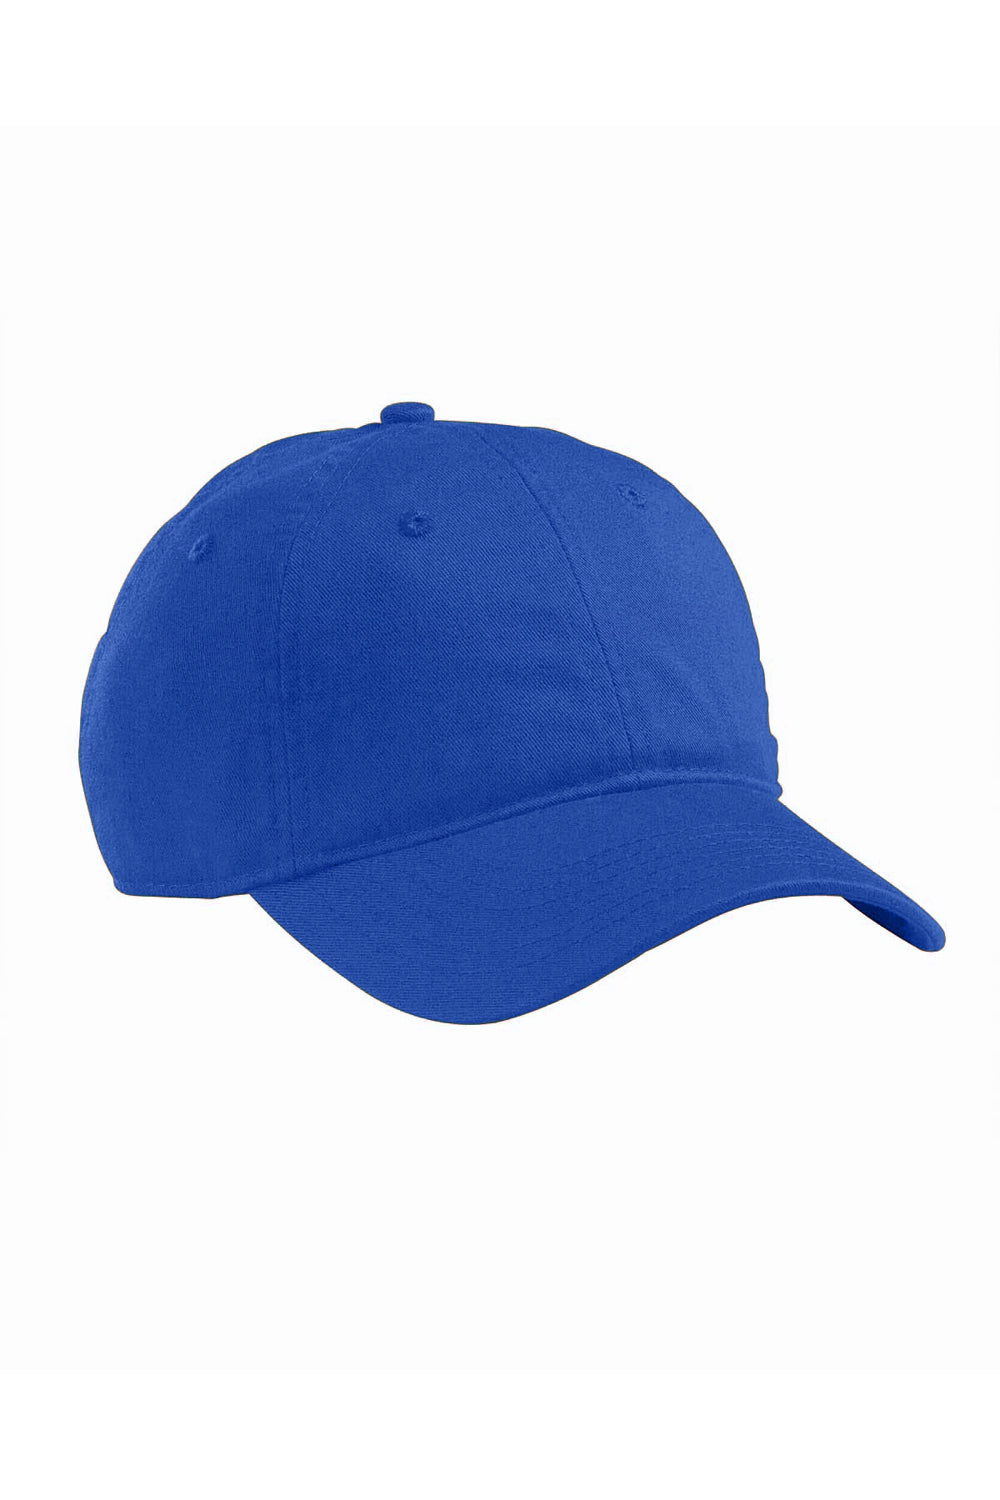 Econscious EC7000 Mens Adjustable Hat Royal Blue Front